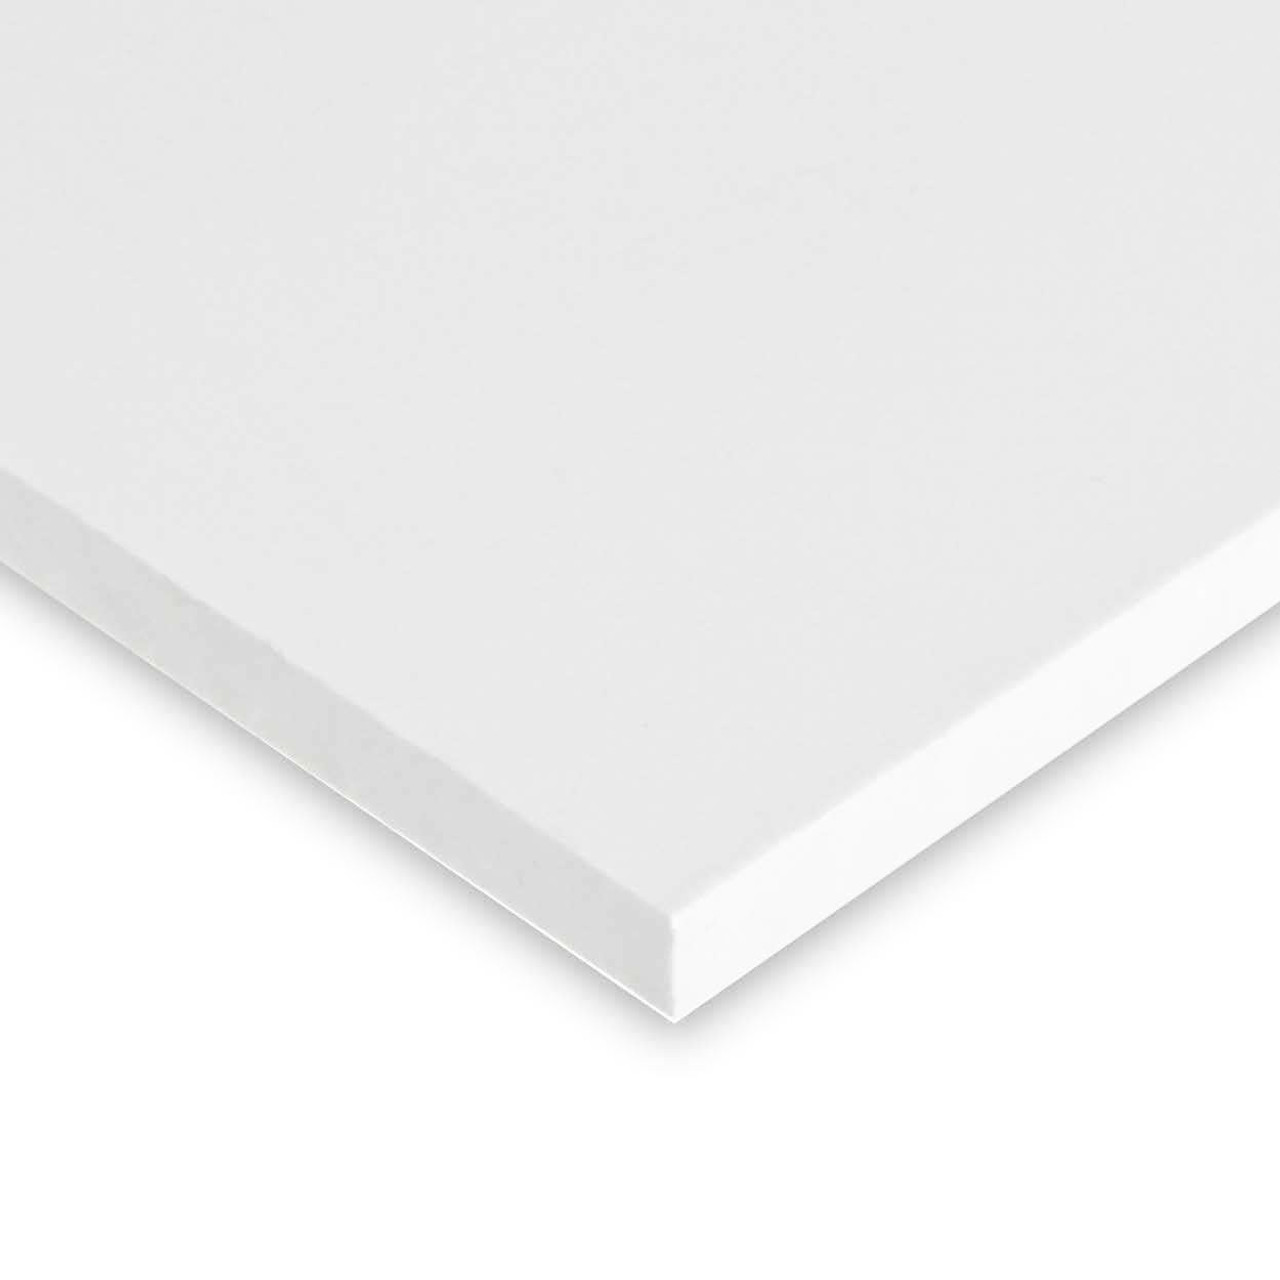 0.472 (1/2 inch) x 24" x 36", PVC Expanded Plastic Sheet, White